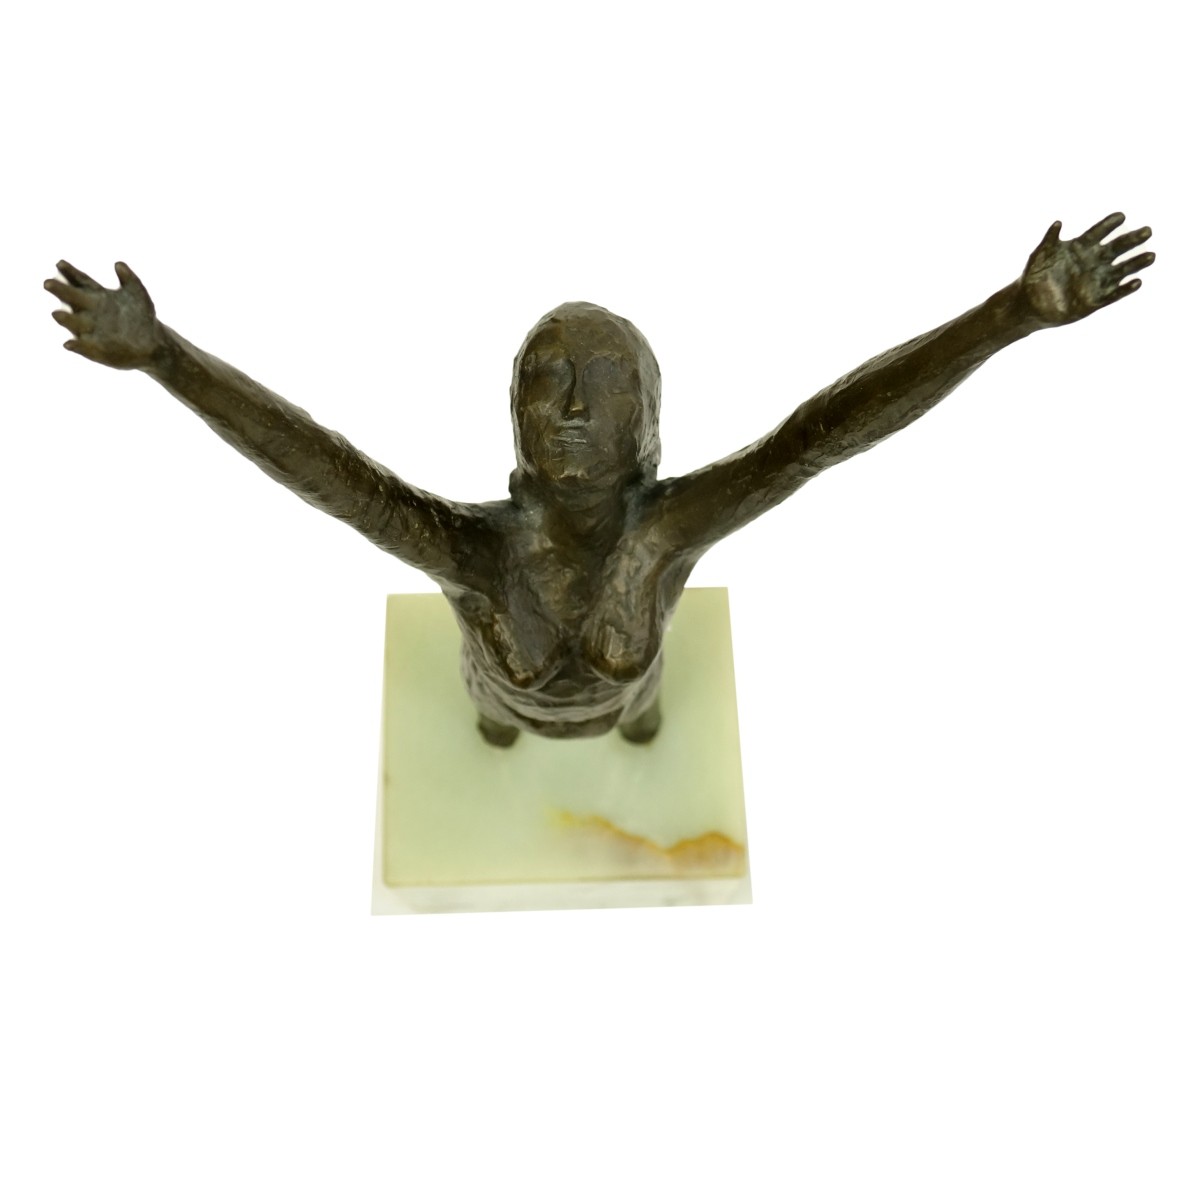 Renzullo, American (20th Century) Bronze Sculpture